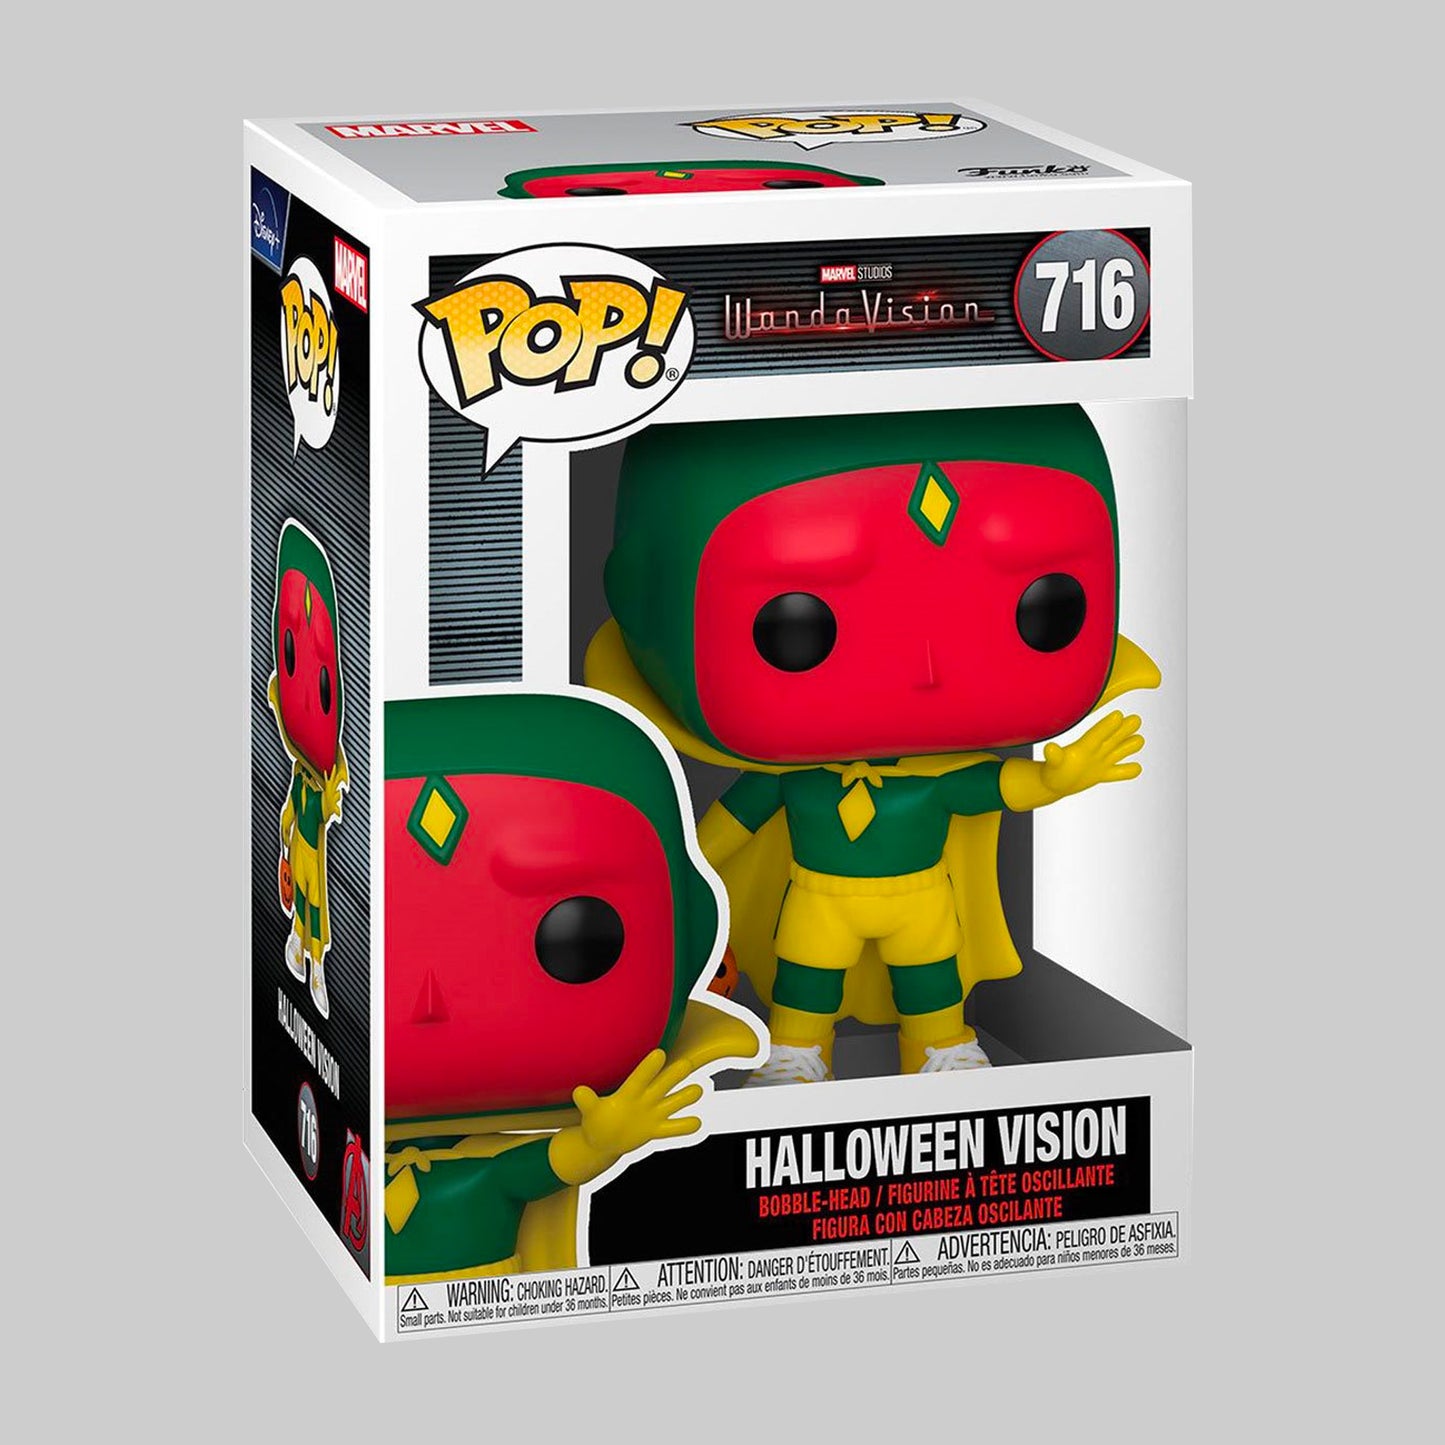 Vision (WandaVision) Marvel Halloween Funko Pop!